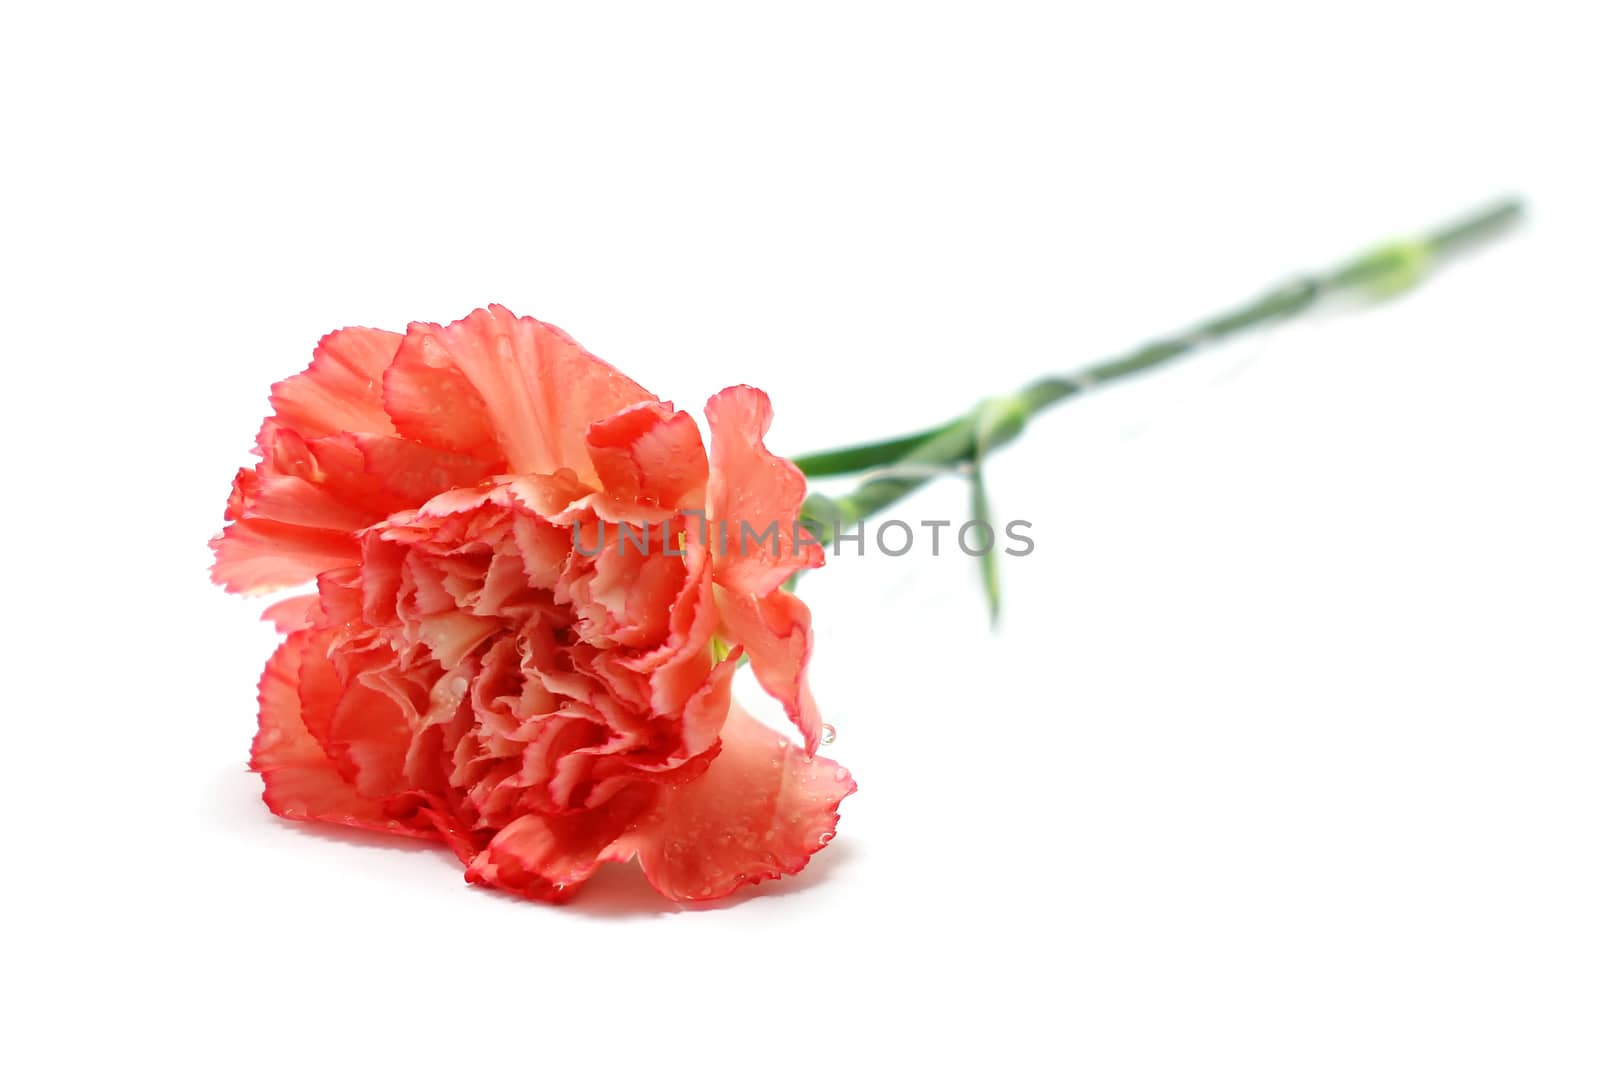 carnation flower by leisuretime70